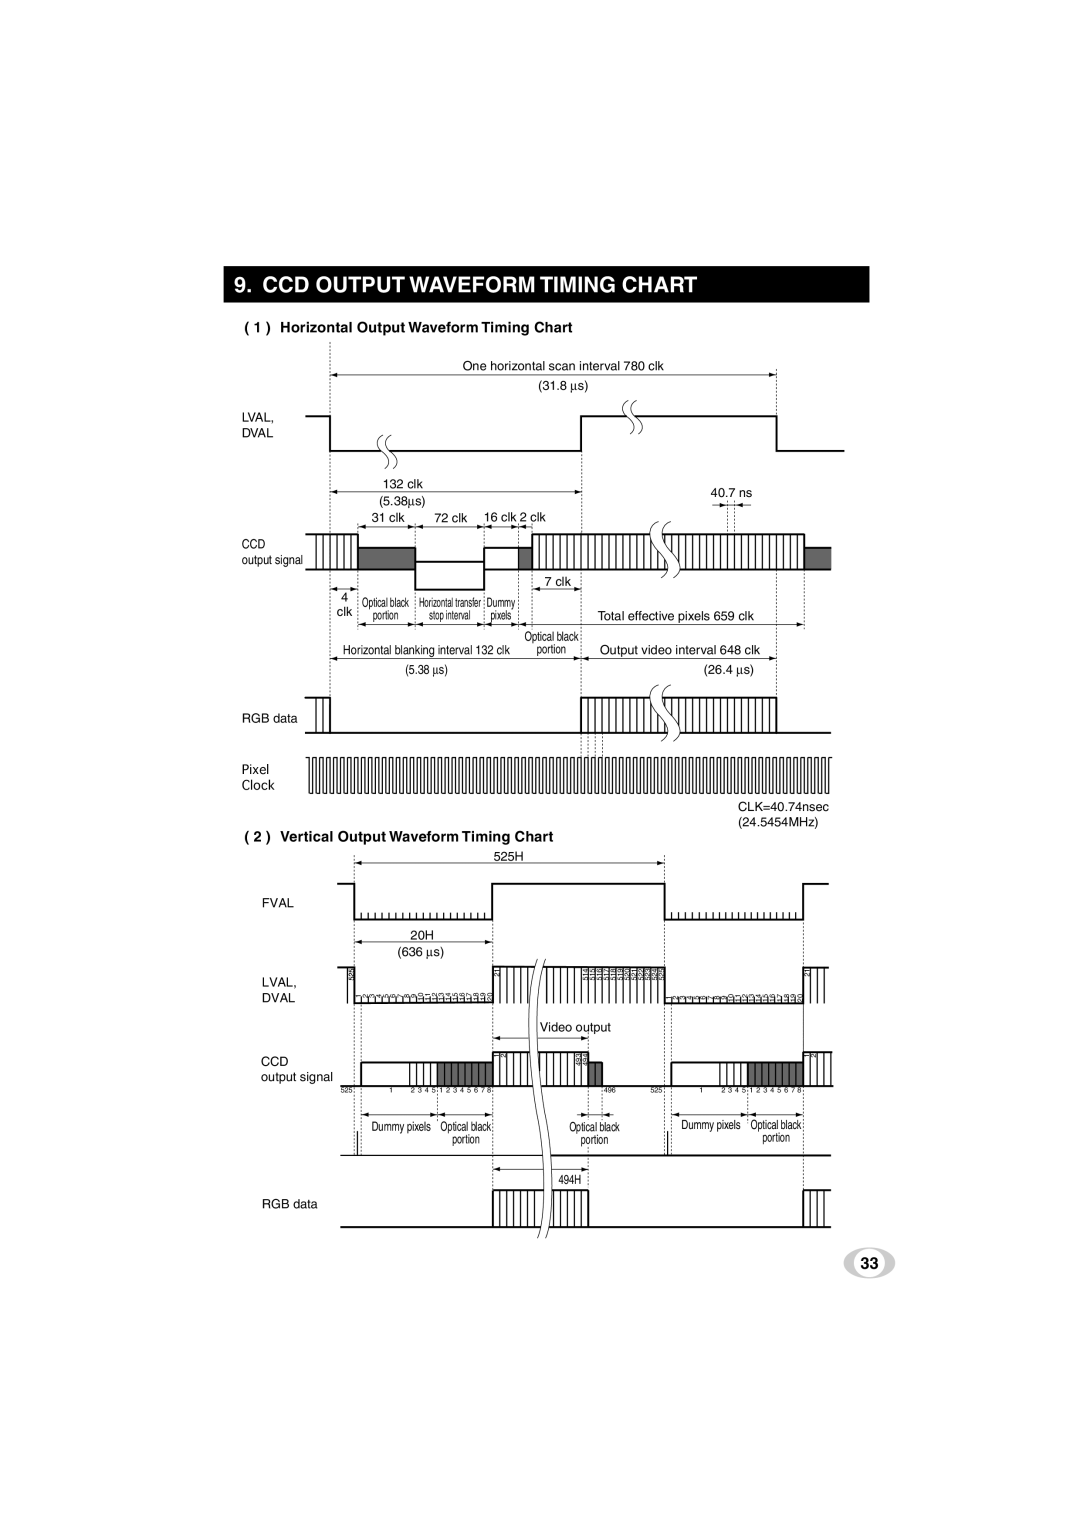 Toshiba IK-TF5C instruction manual Ccd Output Waveform Timing Chart, Horizontal Output Waveform Timing Chart 